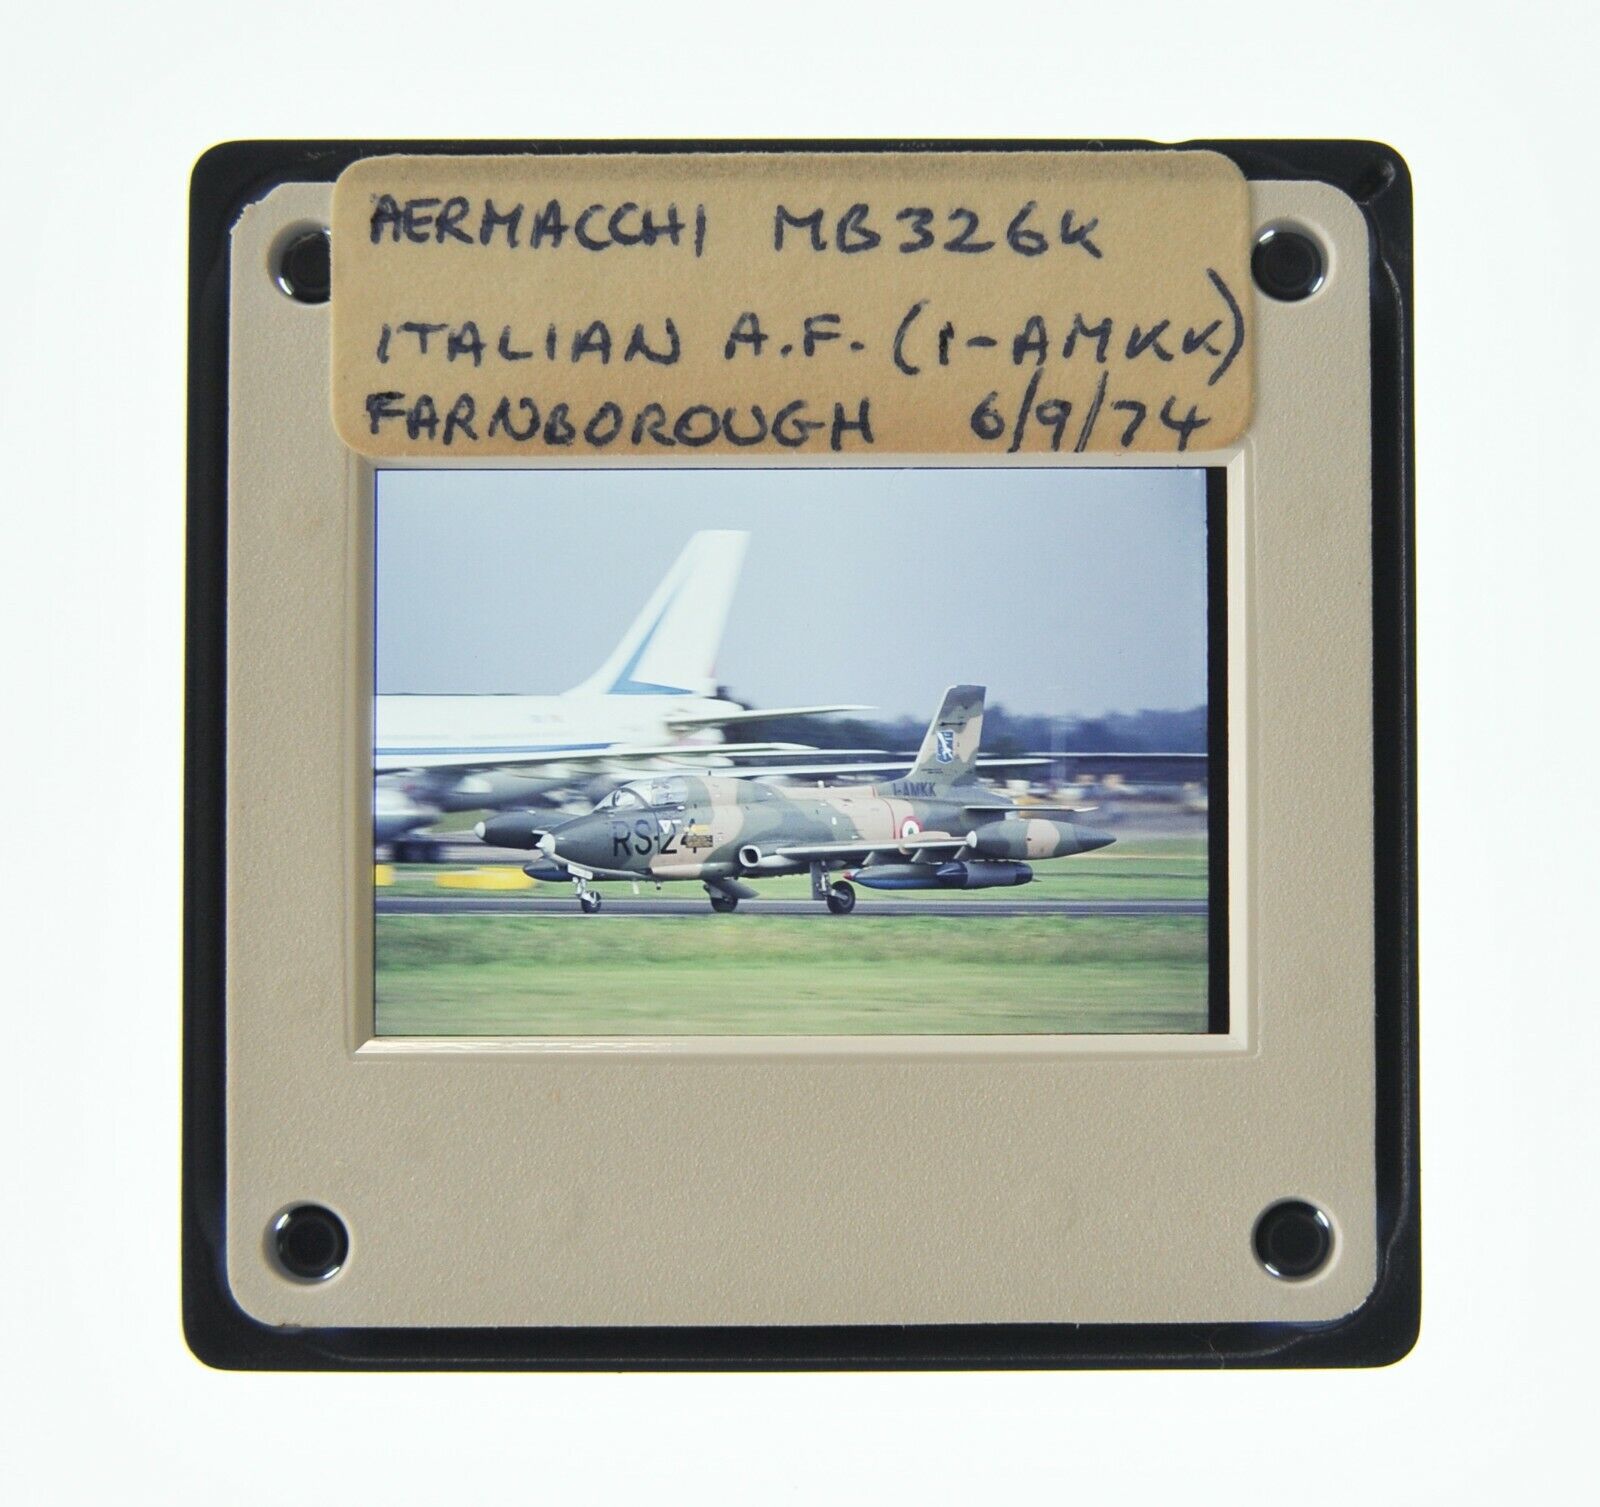 35MM SLIDE AIRCRAFT 1974 AERMACCHI MB-326K ITALIAN A.F (I-AMKK) FARNBOROUGH A67